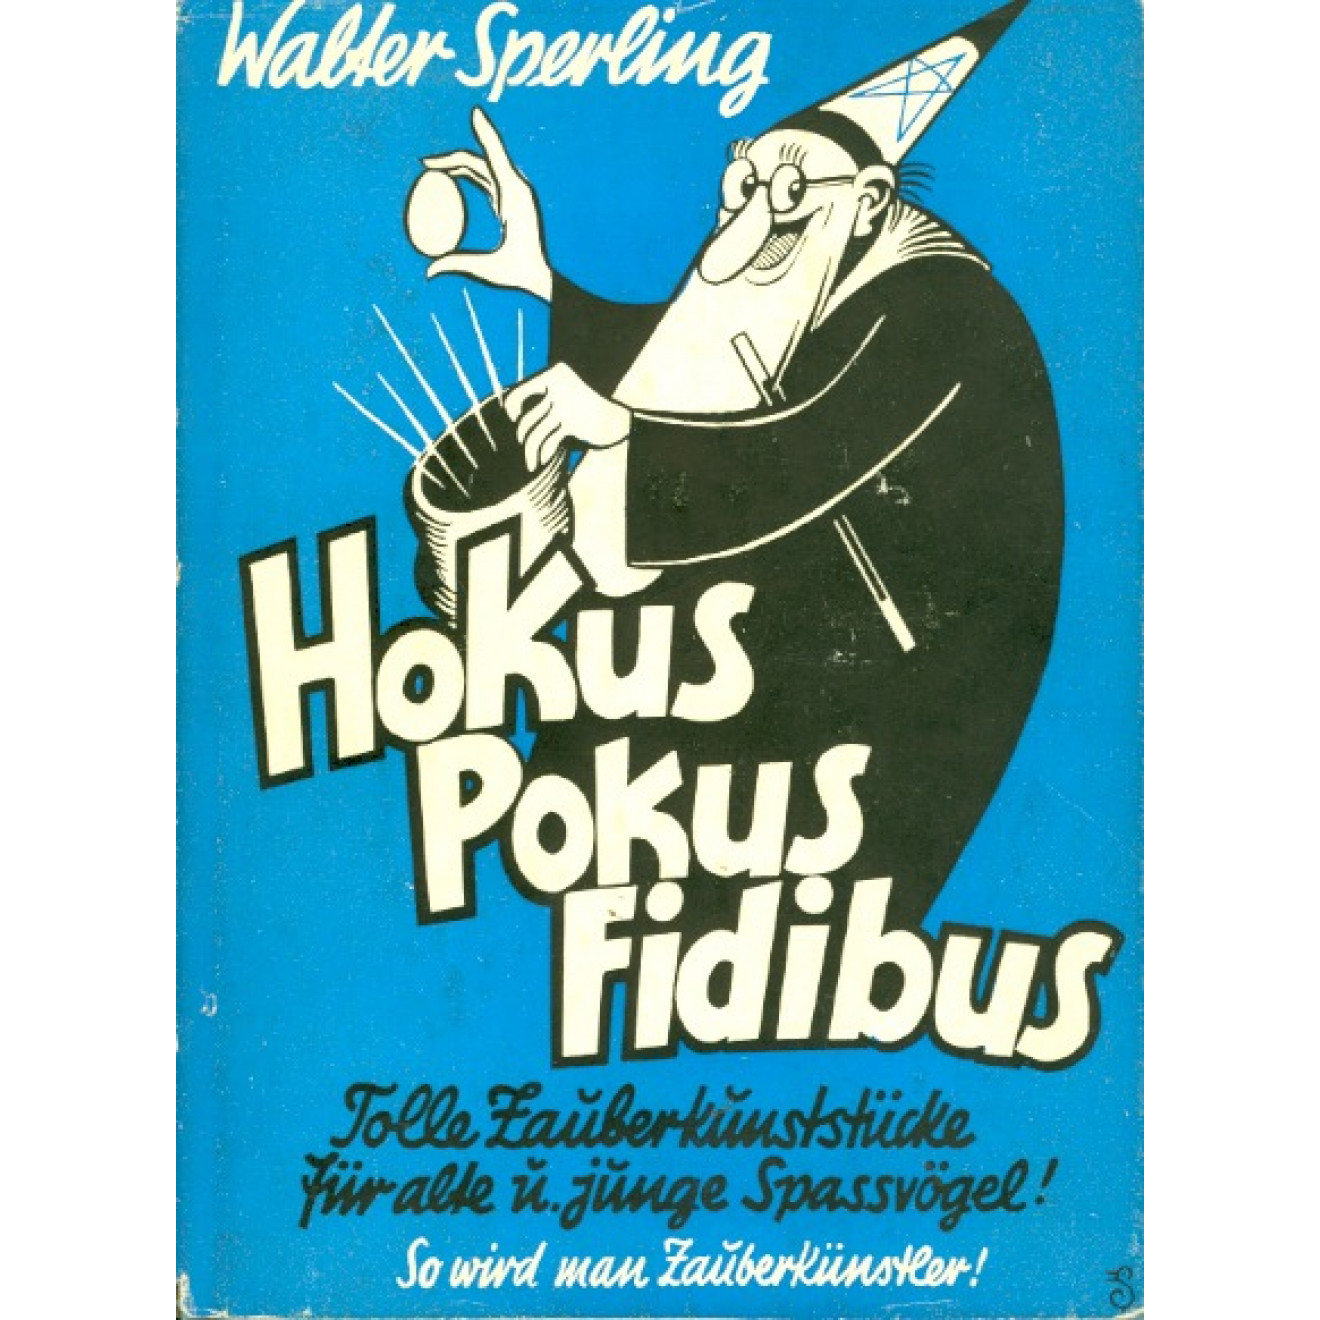 Hokus-Pokus-Fidibus (Sperling)